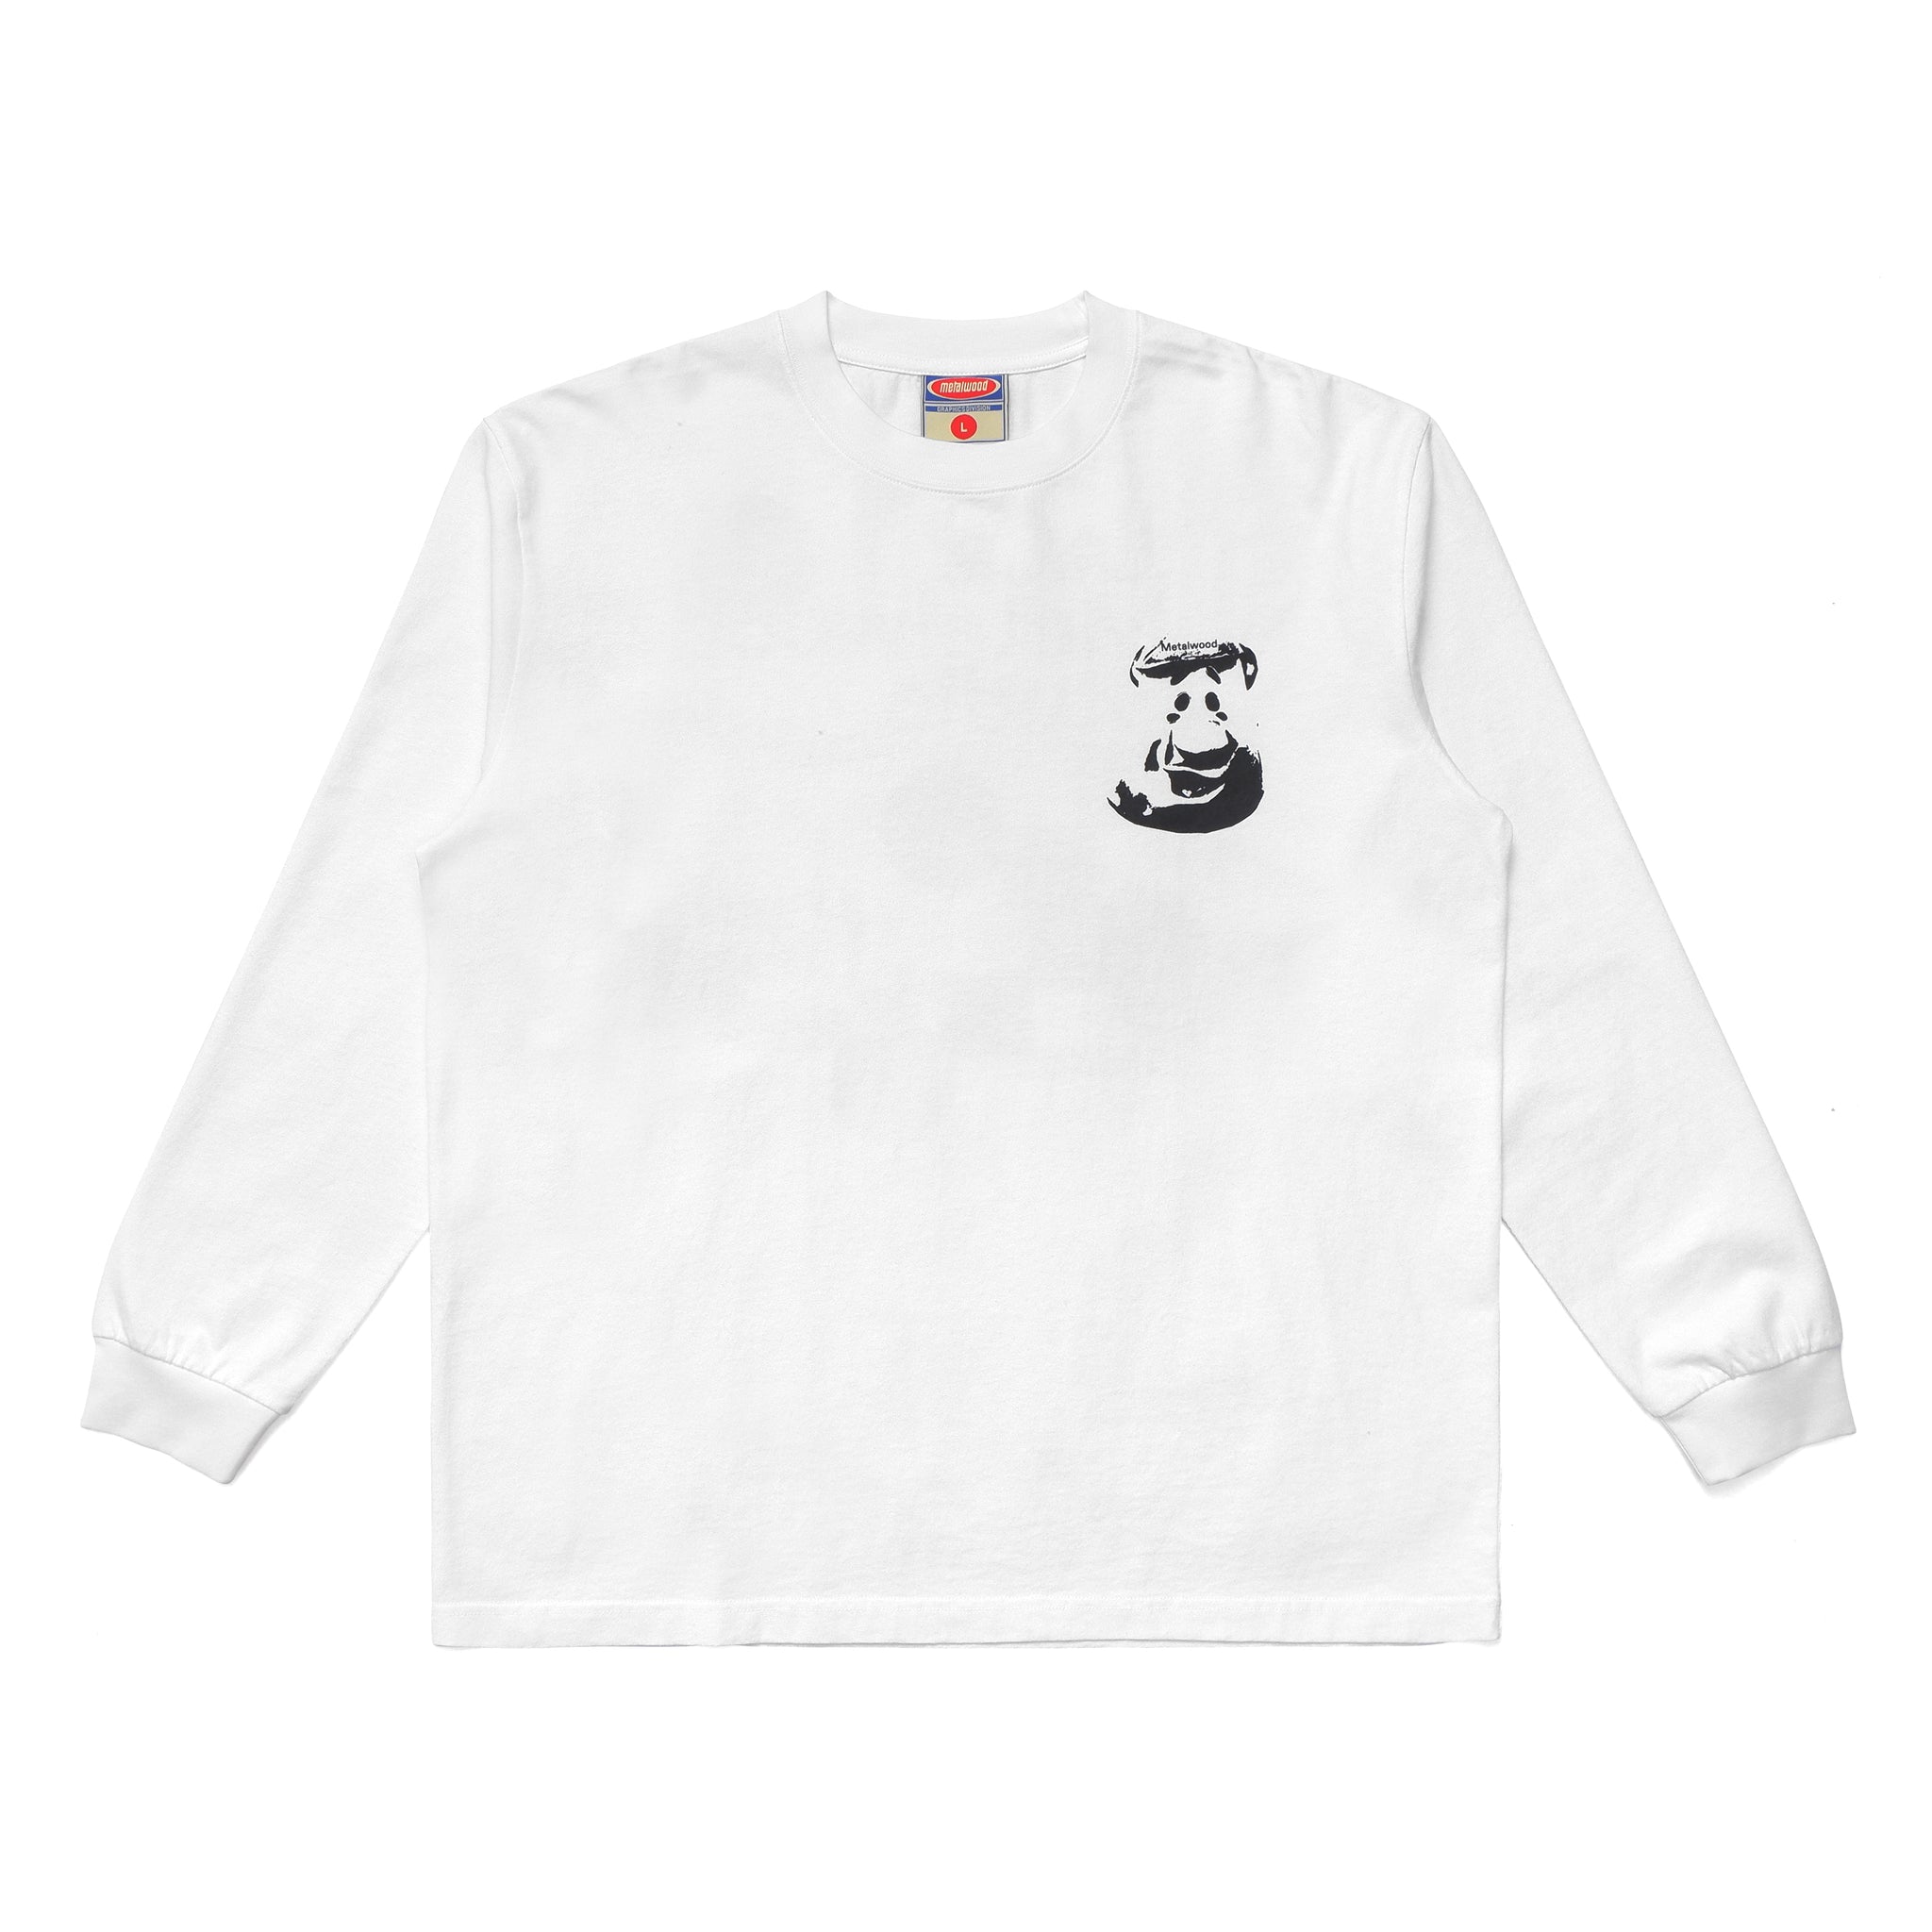 Ball Boy LS T-Shirt - White